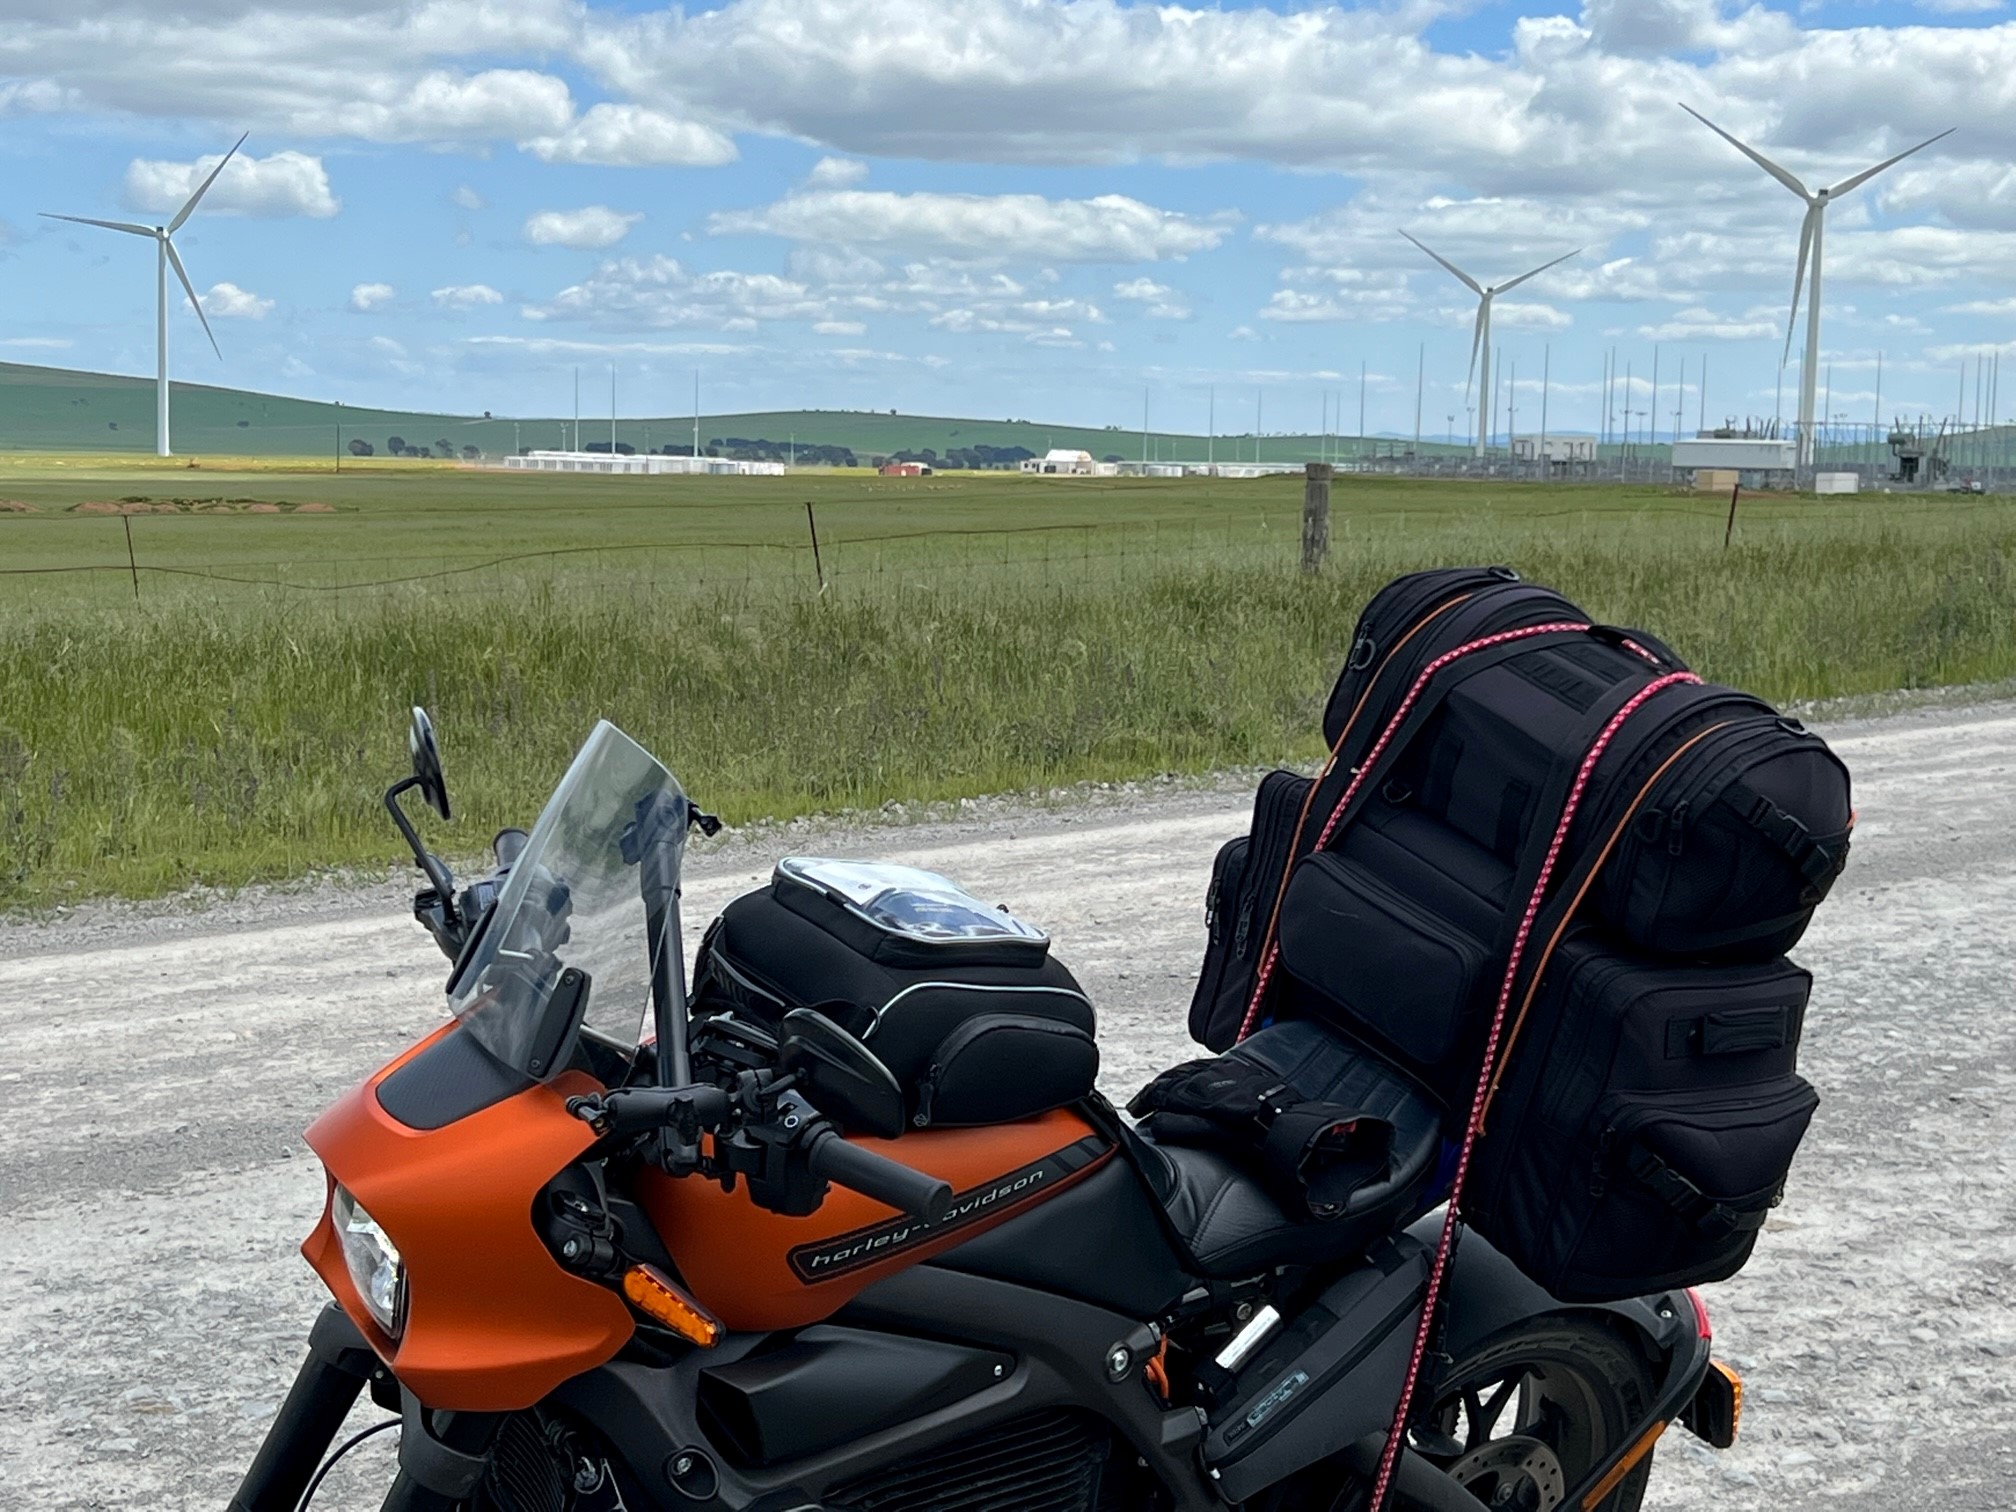 Ed's orange and black Harley parked near a wind farm in regional South Australia 